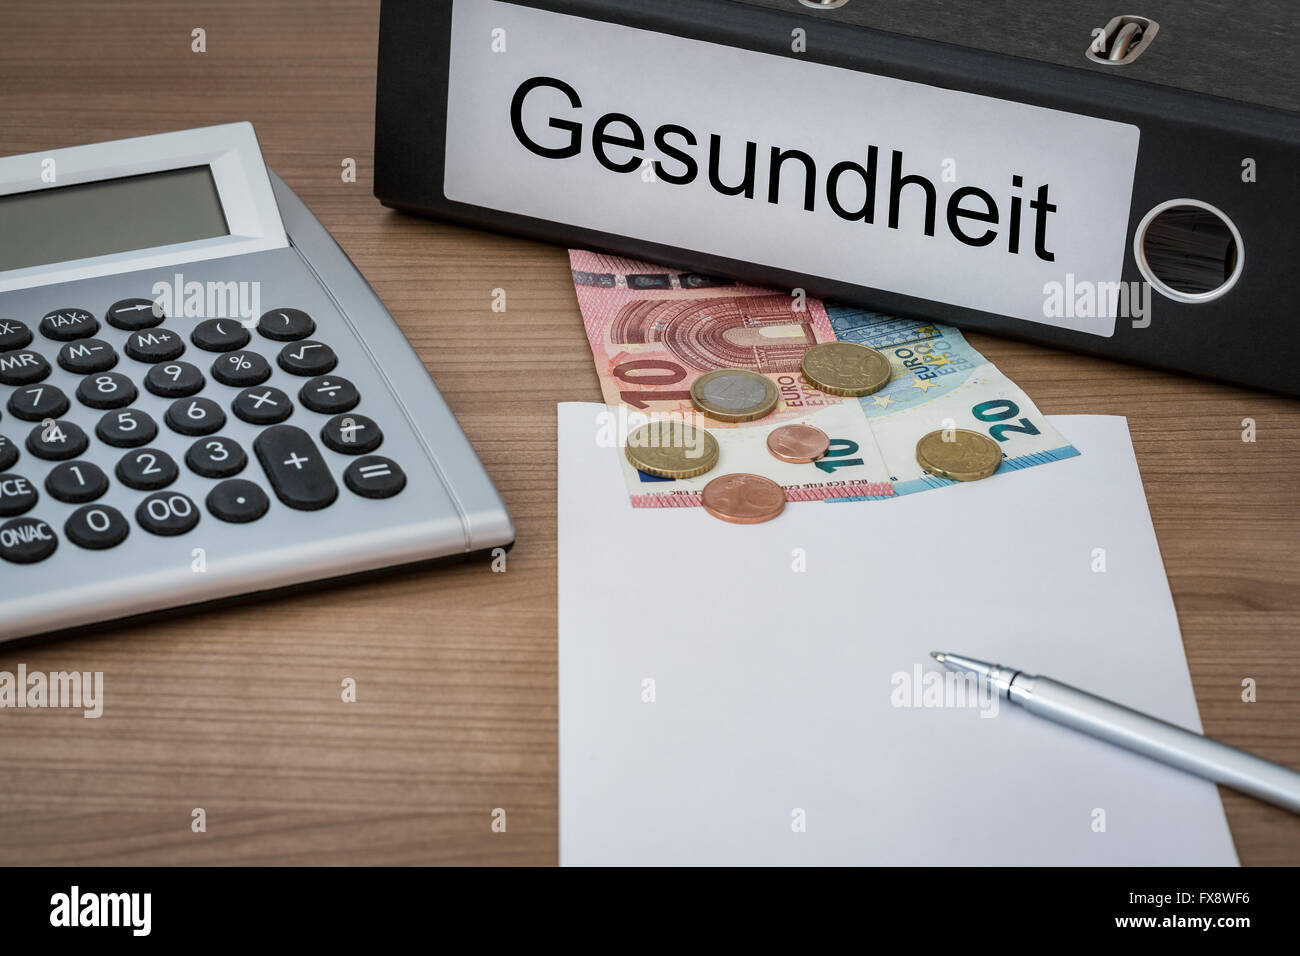 Gesundheit (German Health) written on a binder on a desk with euro money calculator blank sheet and pen Stock Photo